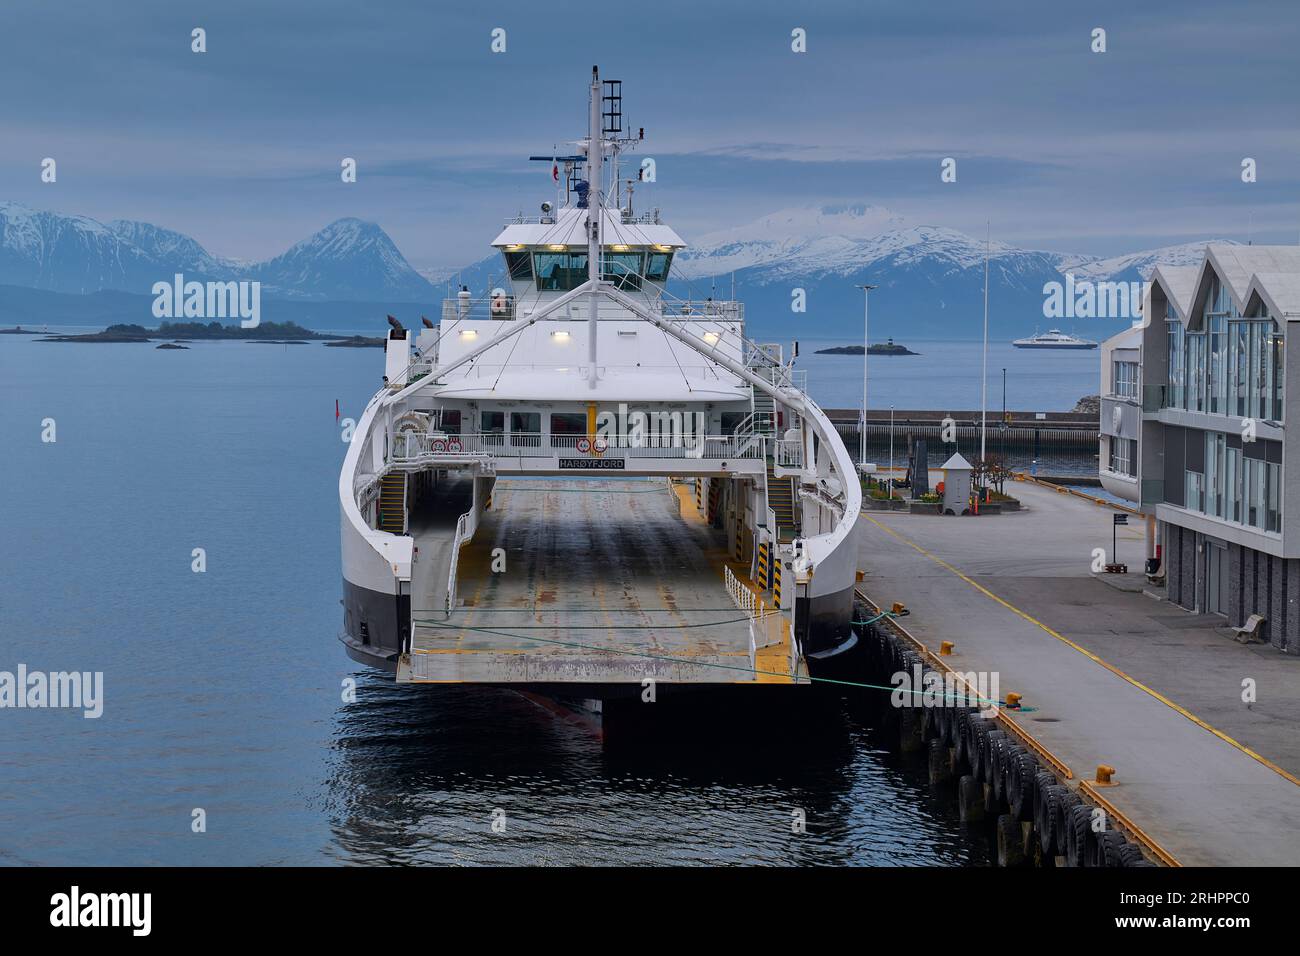 Das vollständig elektrisch und emissionsfrei arbeitende Boreal Norge AS RO-RO/Passenger Ship, MF Harøyfjord, liegt in Molde Harbour, Møre og Romsdal, Norwegen. Stockfoto